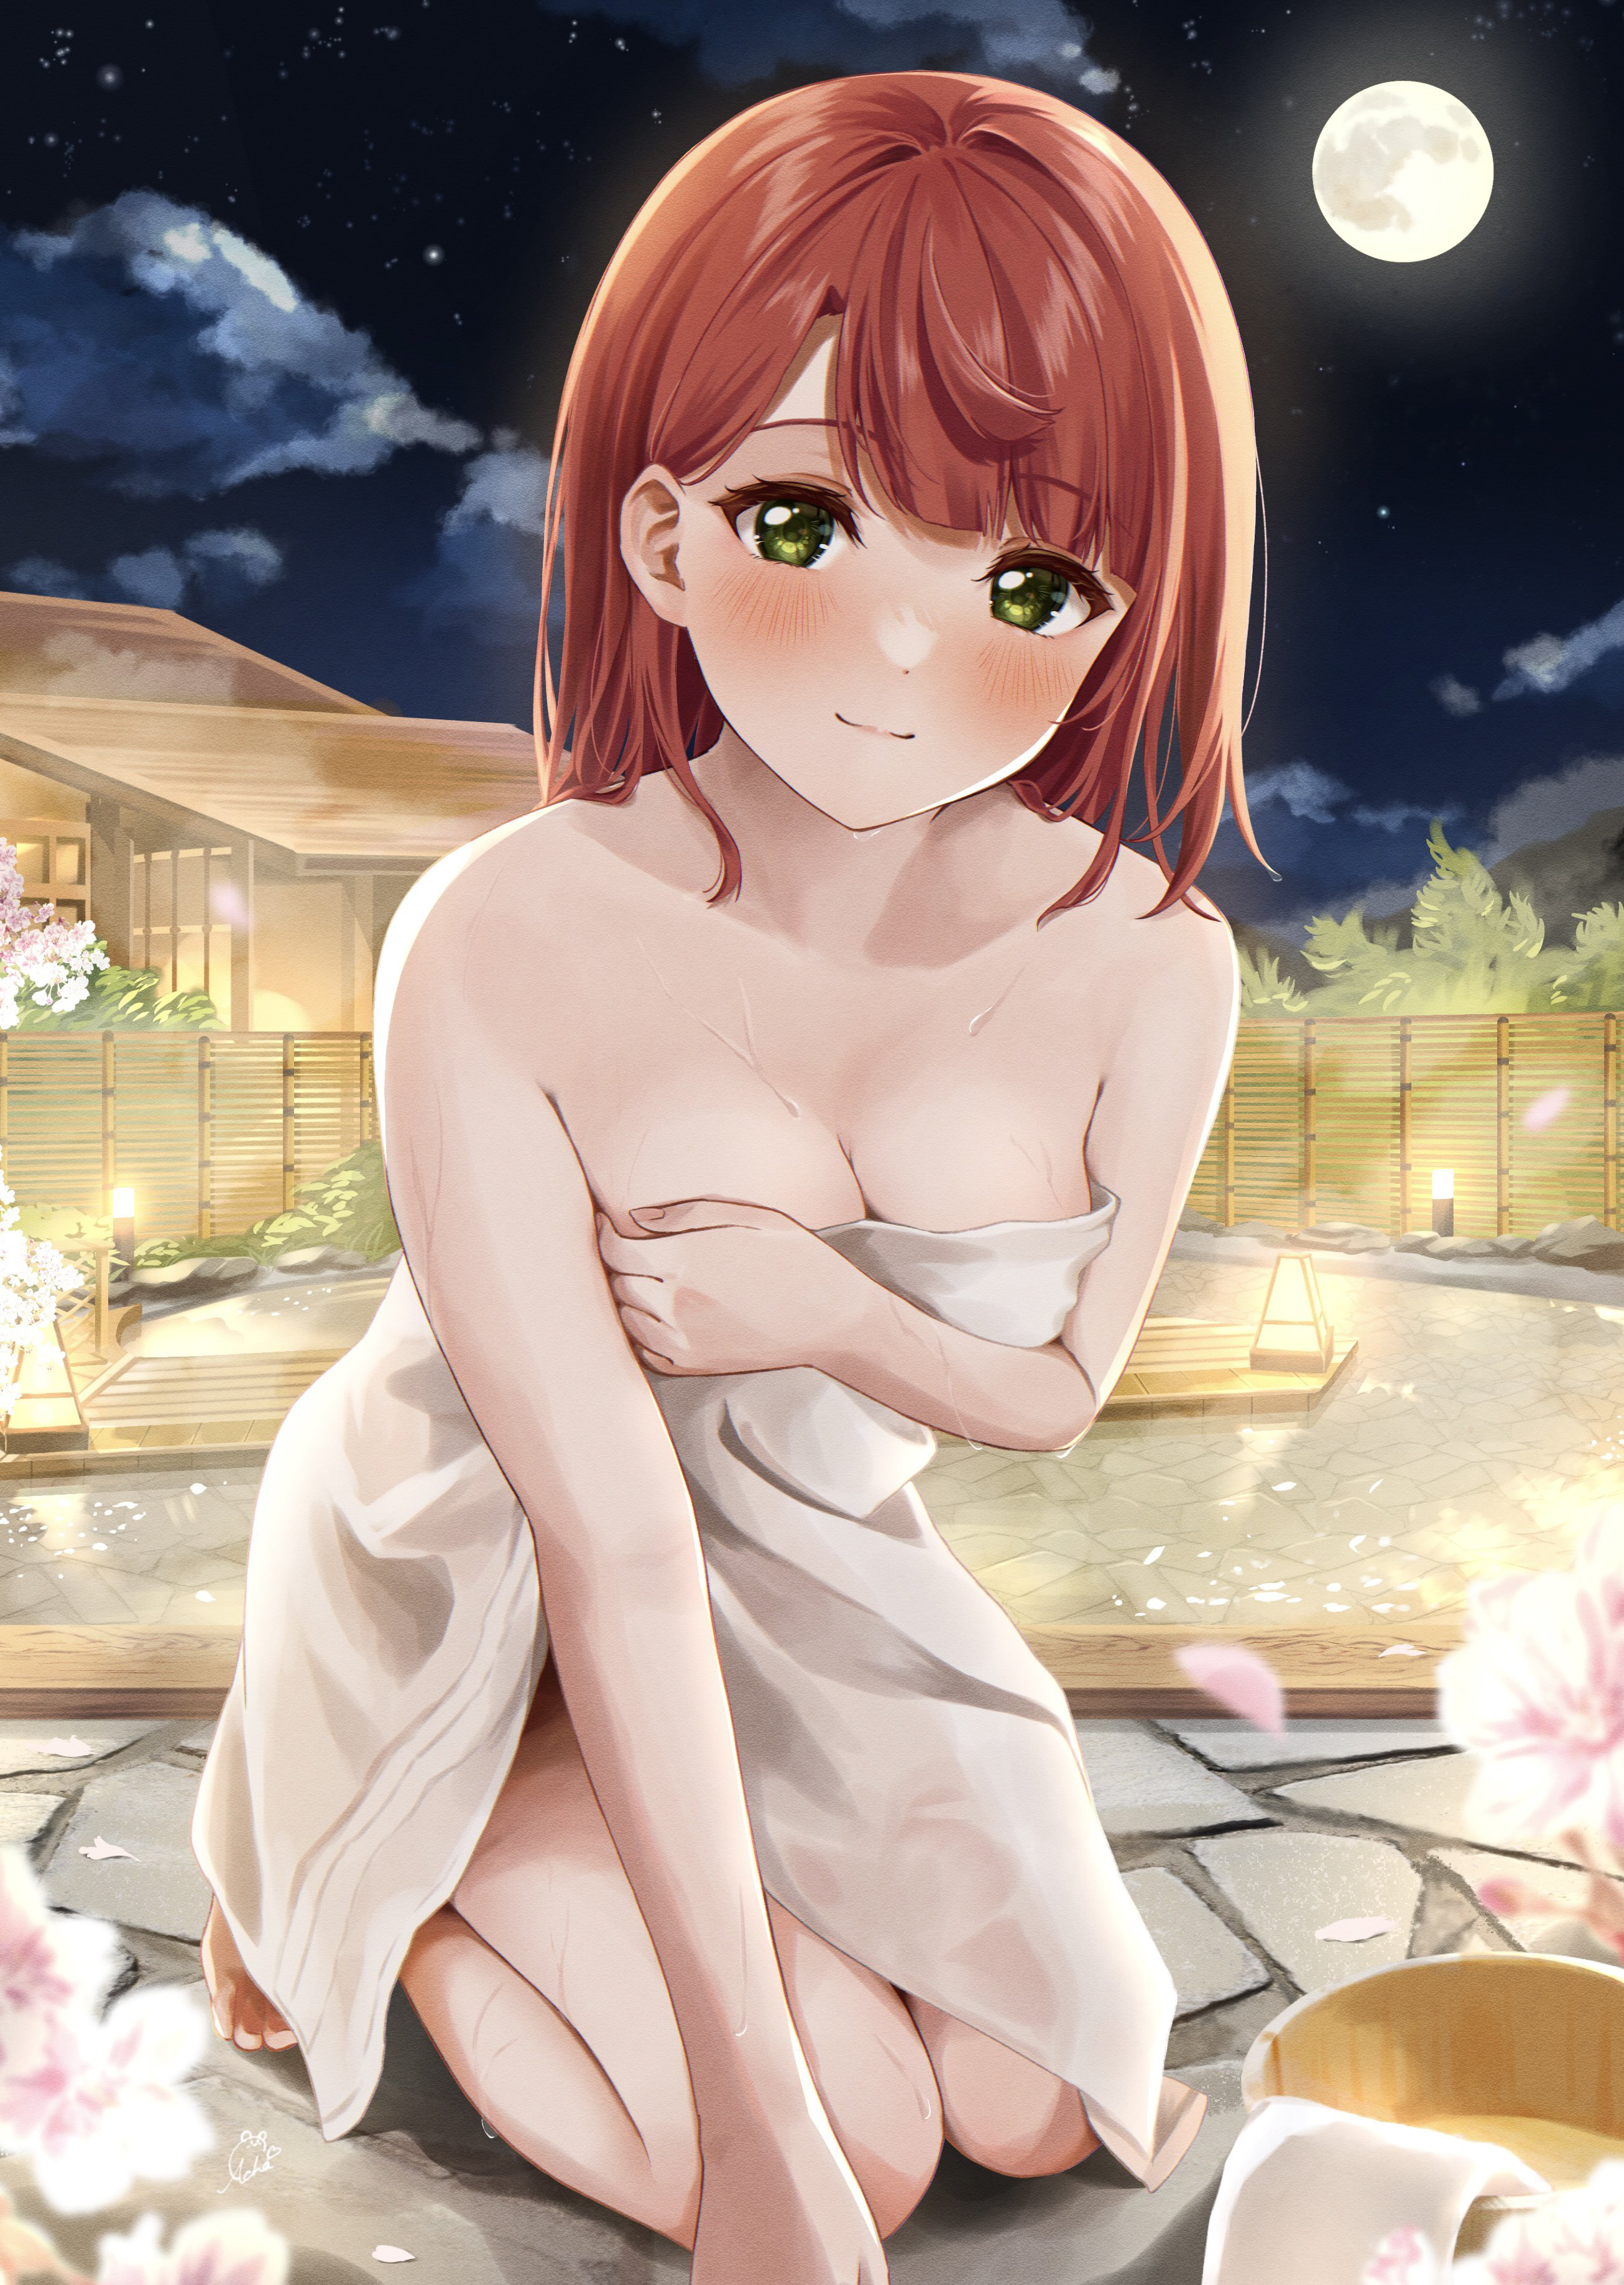 Anime 2612x3675 anime anime girls redhead Moon cleavage water hot spring towel blushing Love Live!